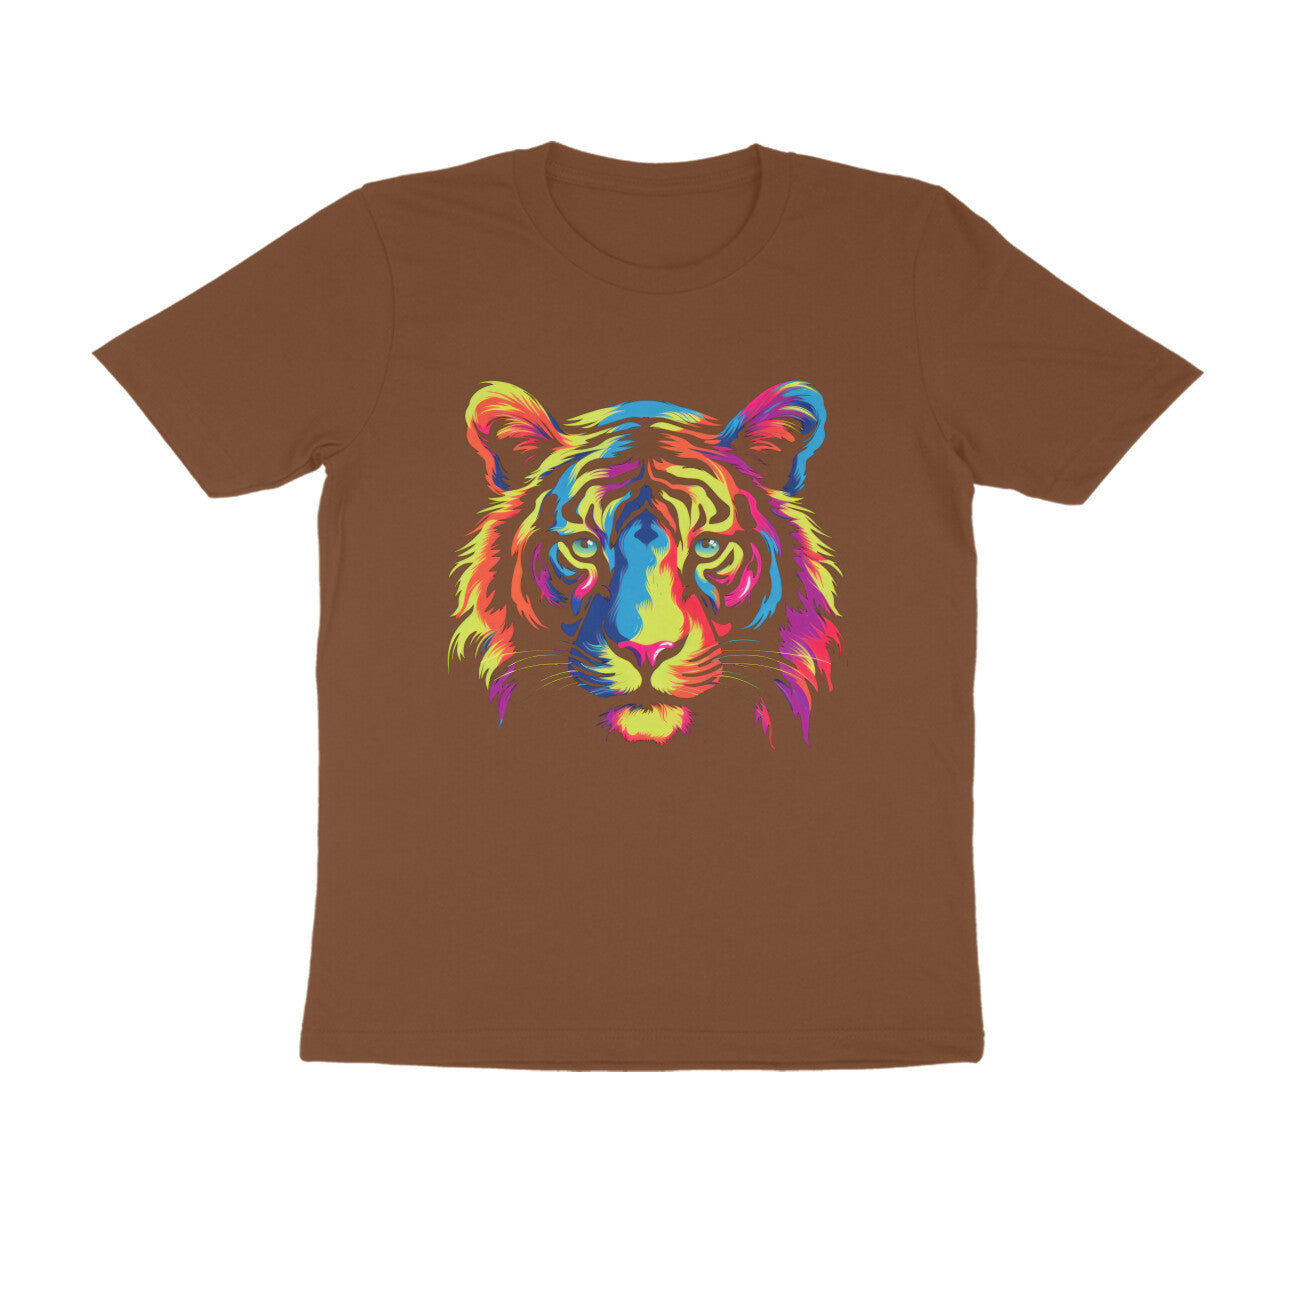 Men's Half Sleeve Round Neck Rainbow Tiger T-Shirt